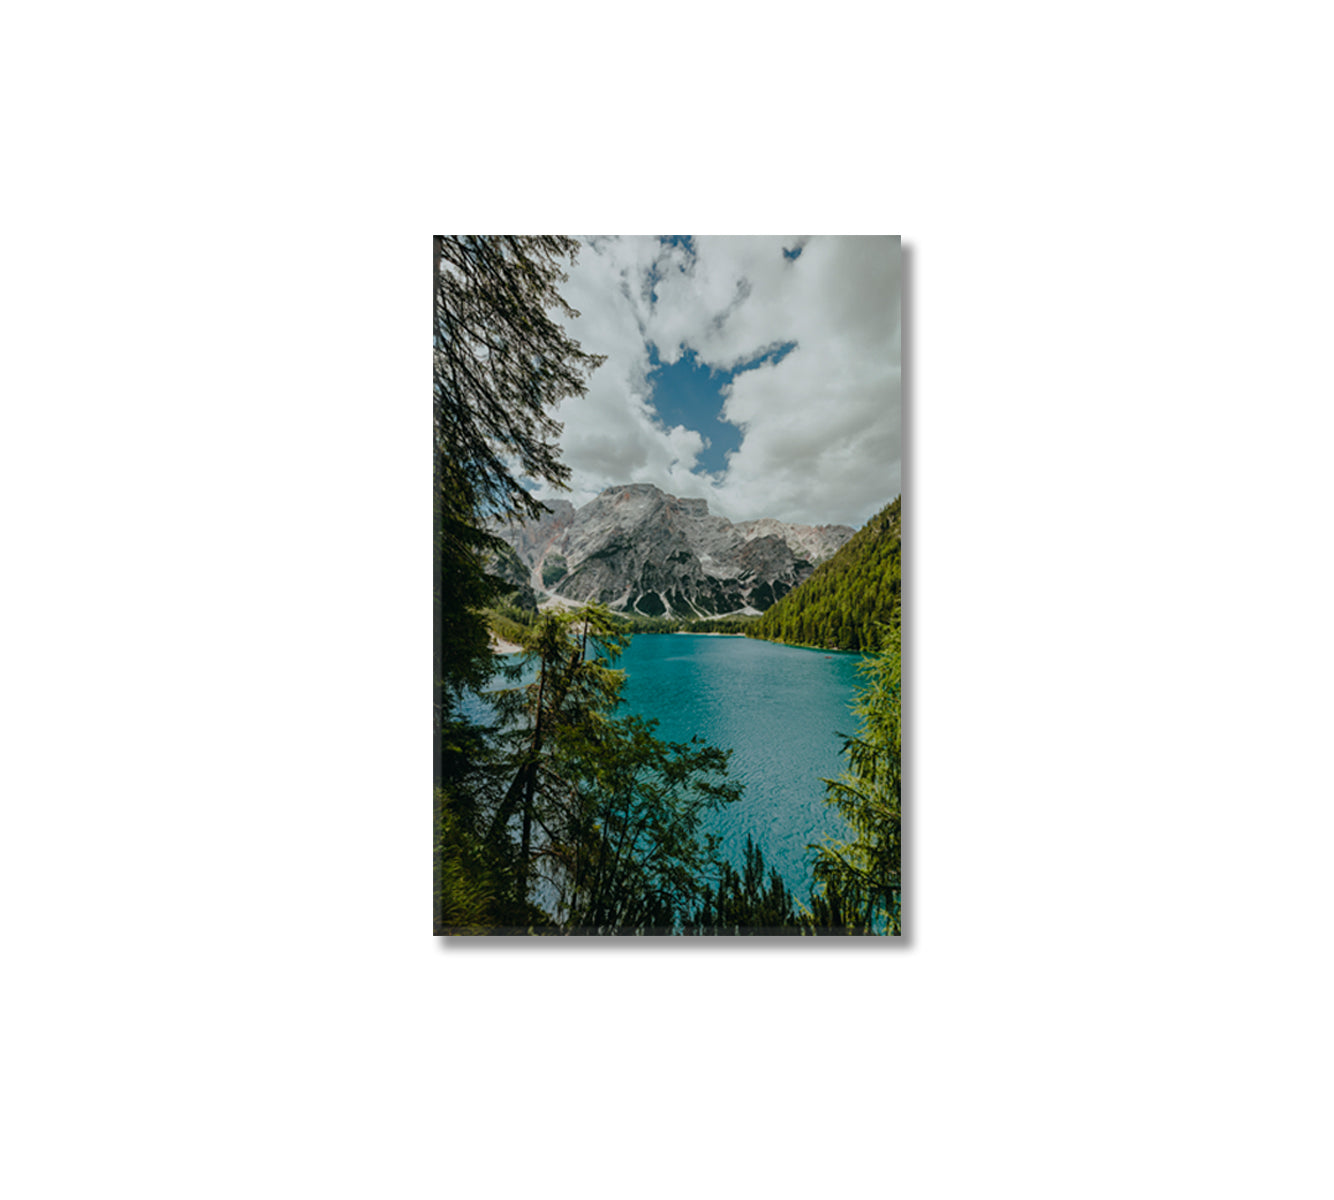 Lake Braies Dolomites Alps Canvas Print-Canvas Print-CetArt-1 panel-16x24 inches-CetArt